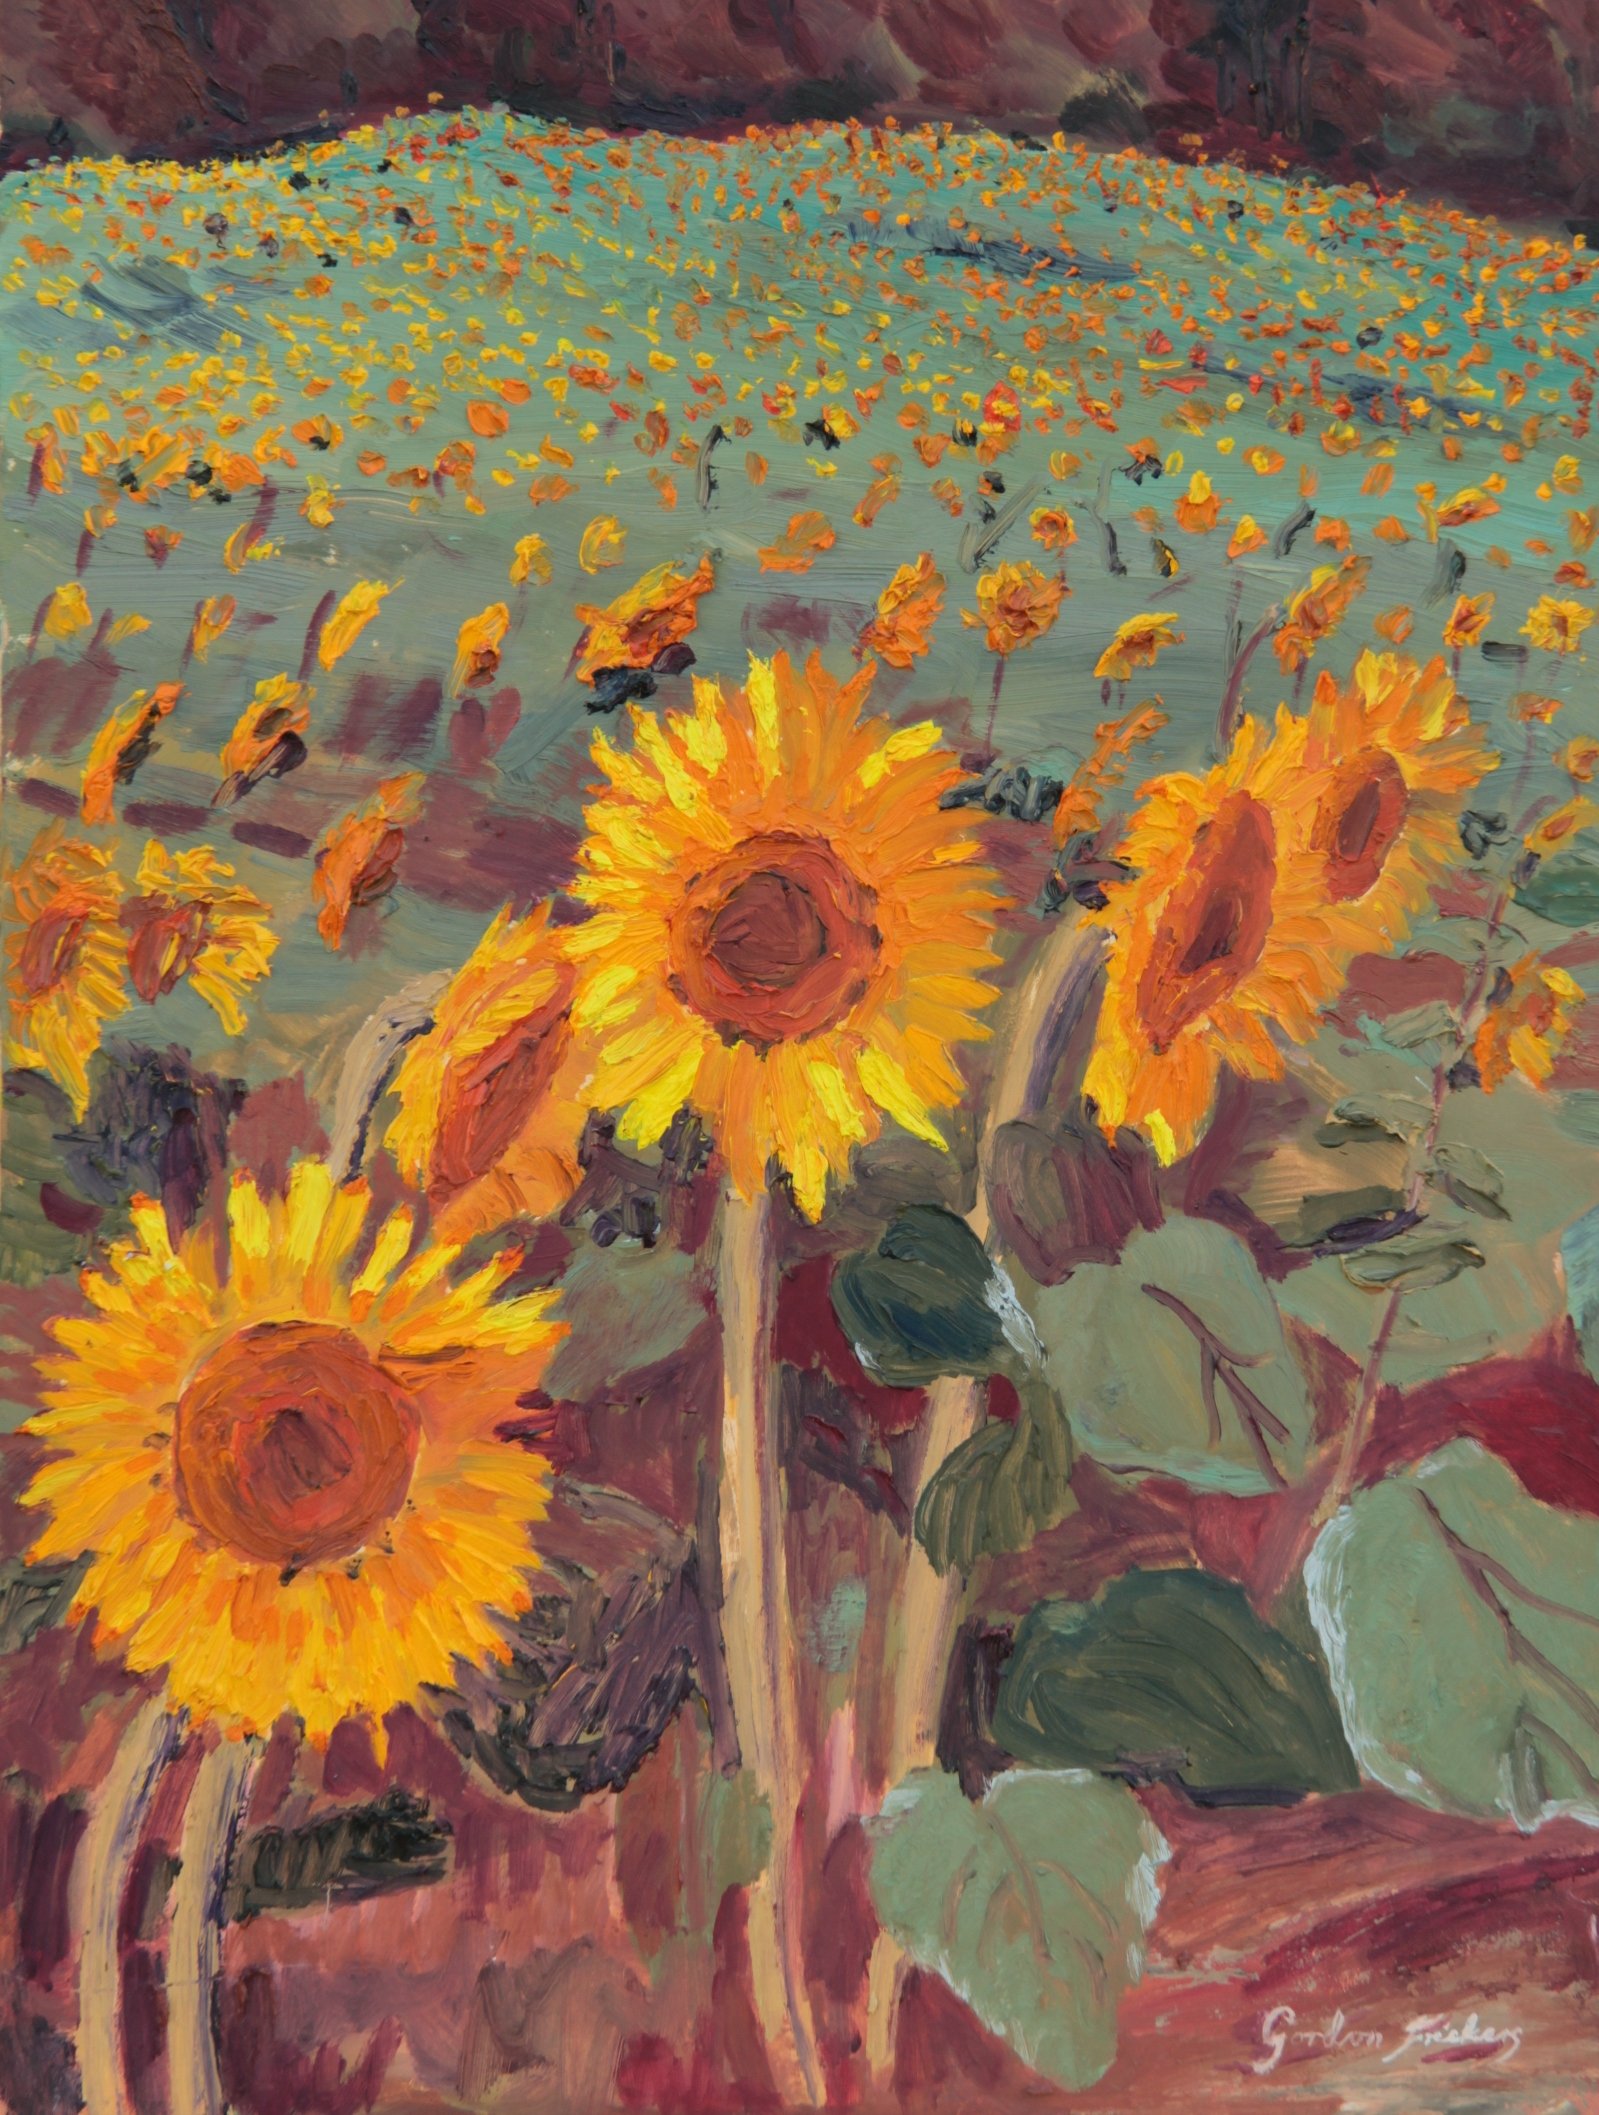 Sunflowers, painted